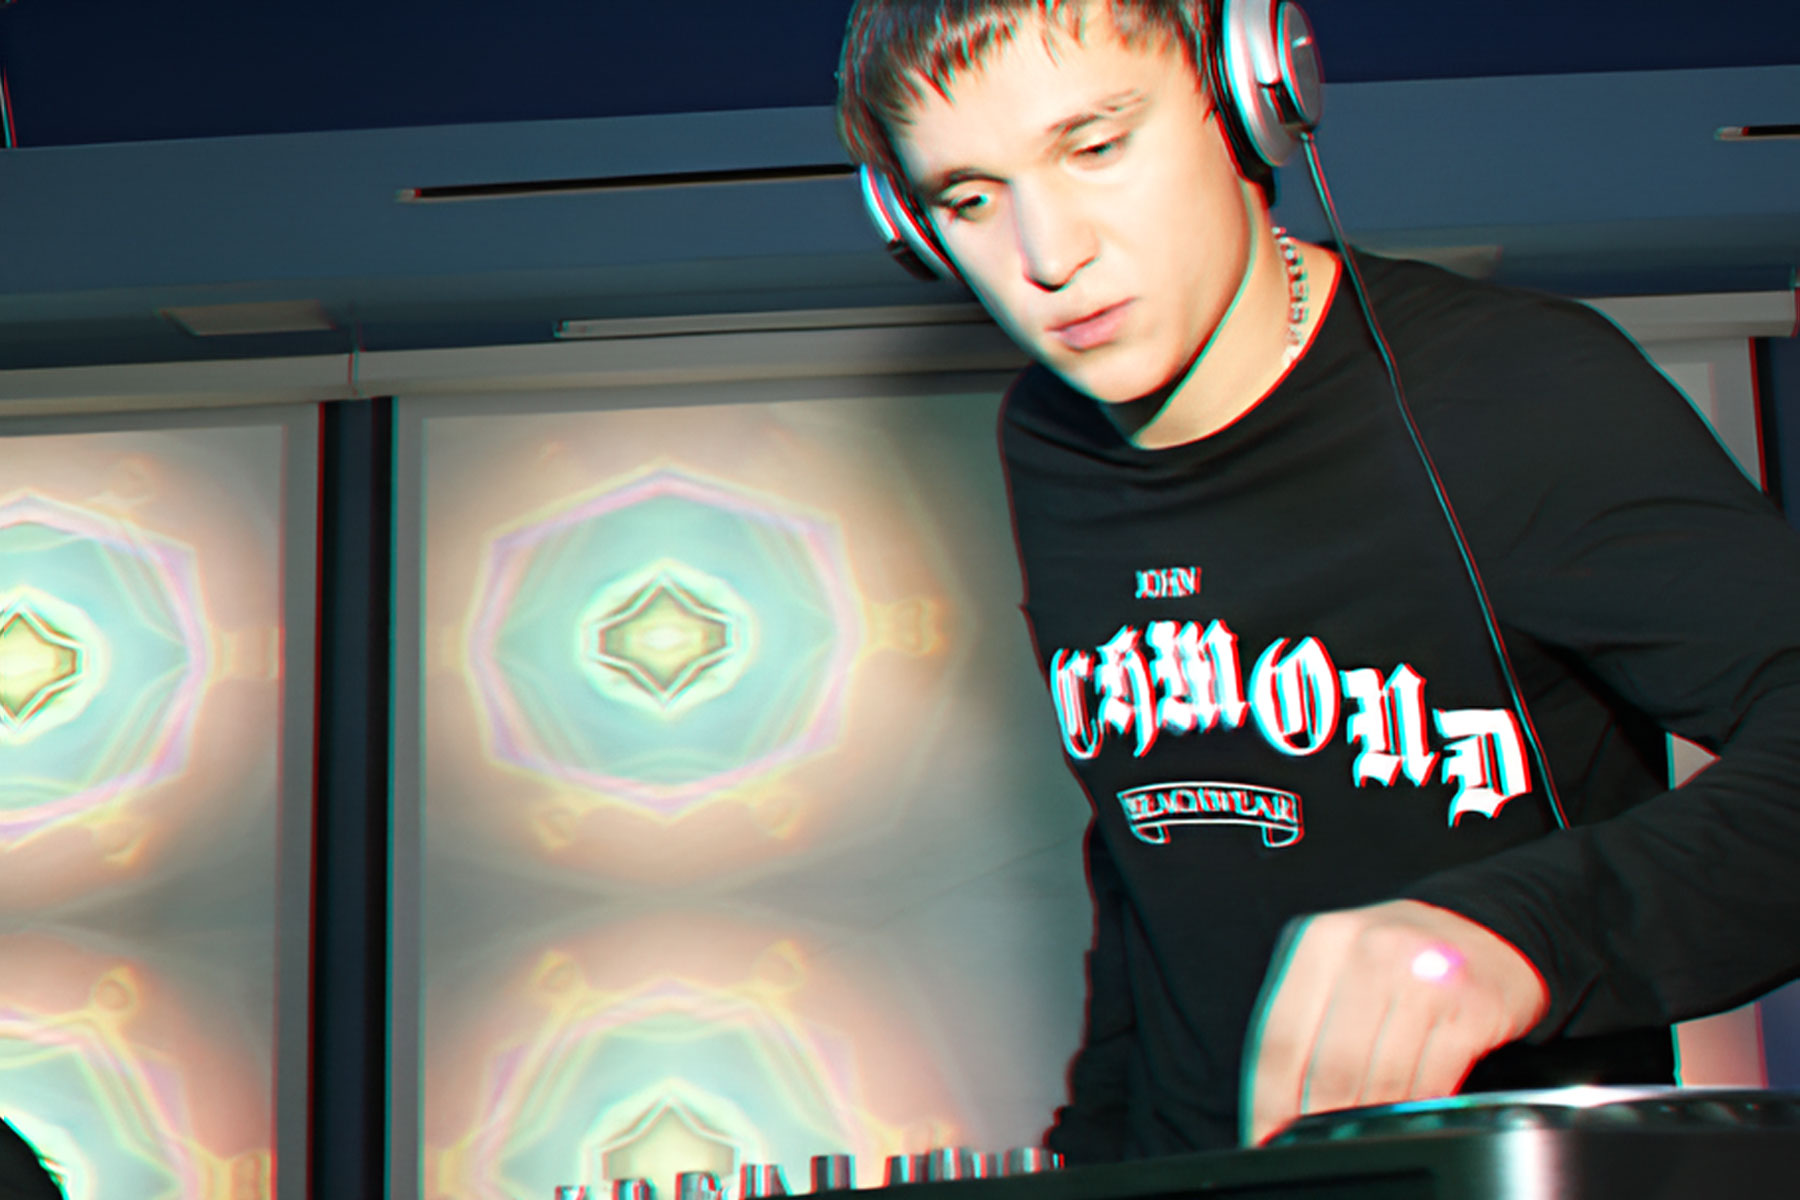 The DJ King of Donetsk